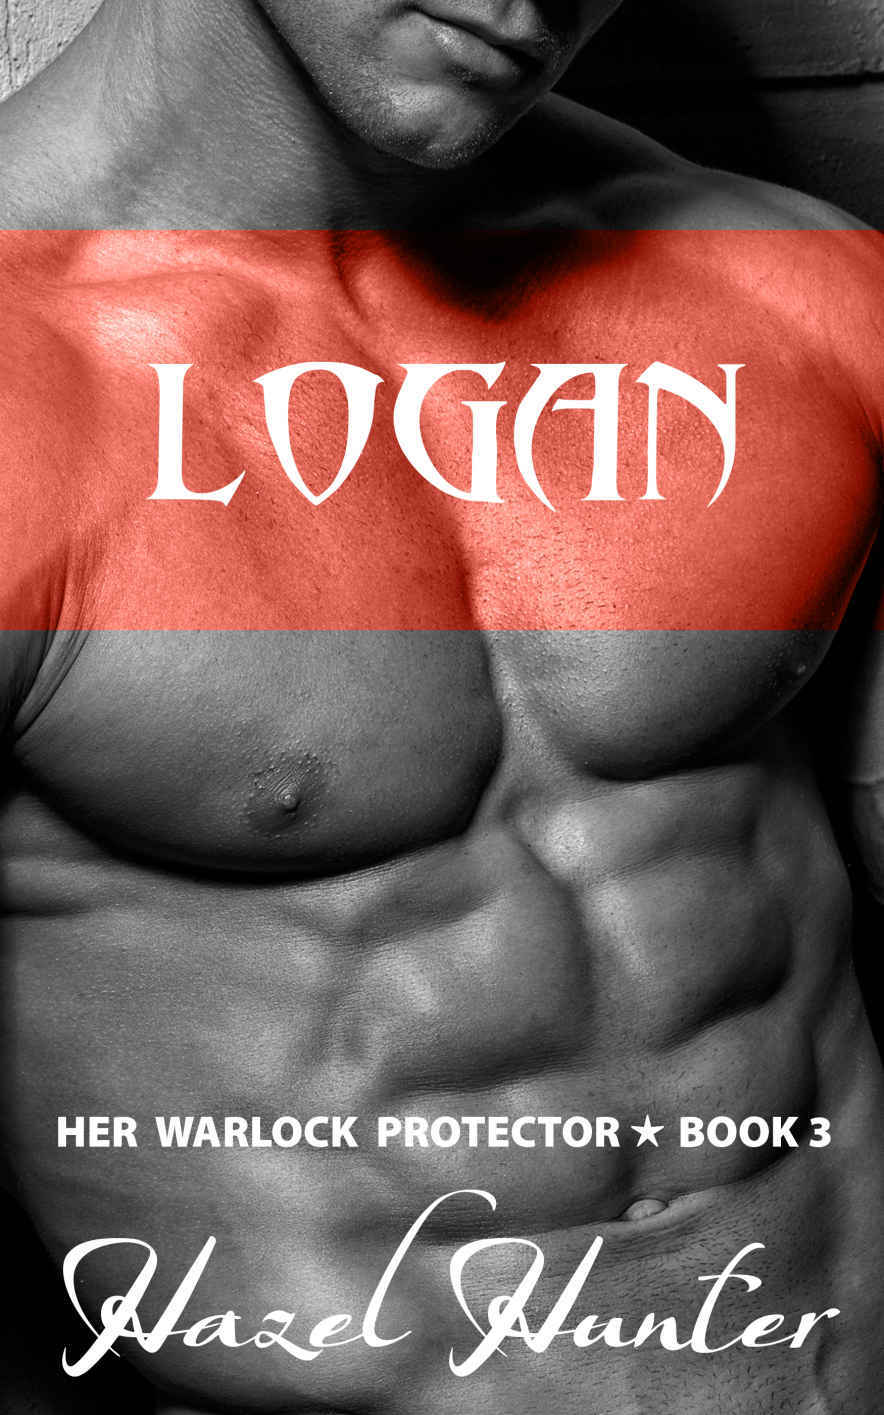 Logan: Her Warlock Protector Book 3 by Hazel Hunter